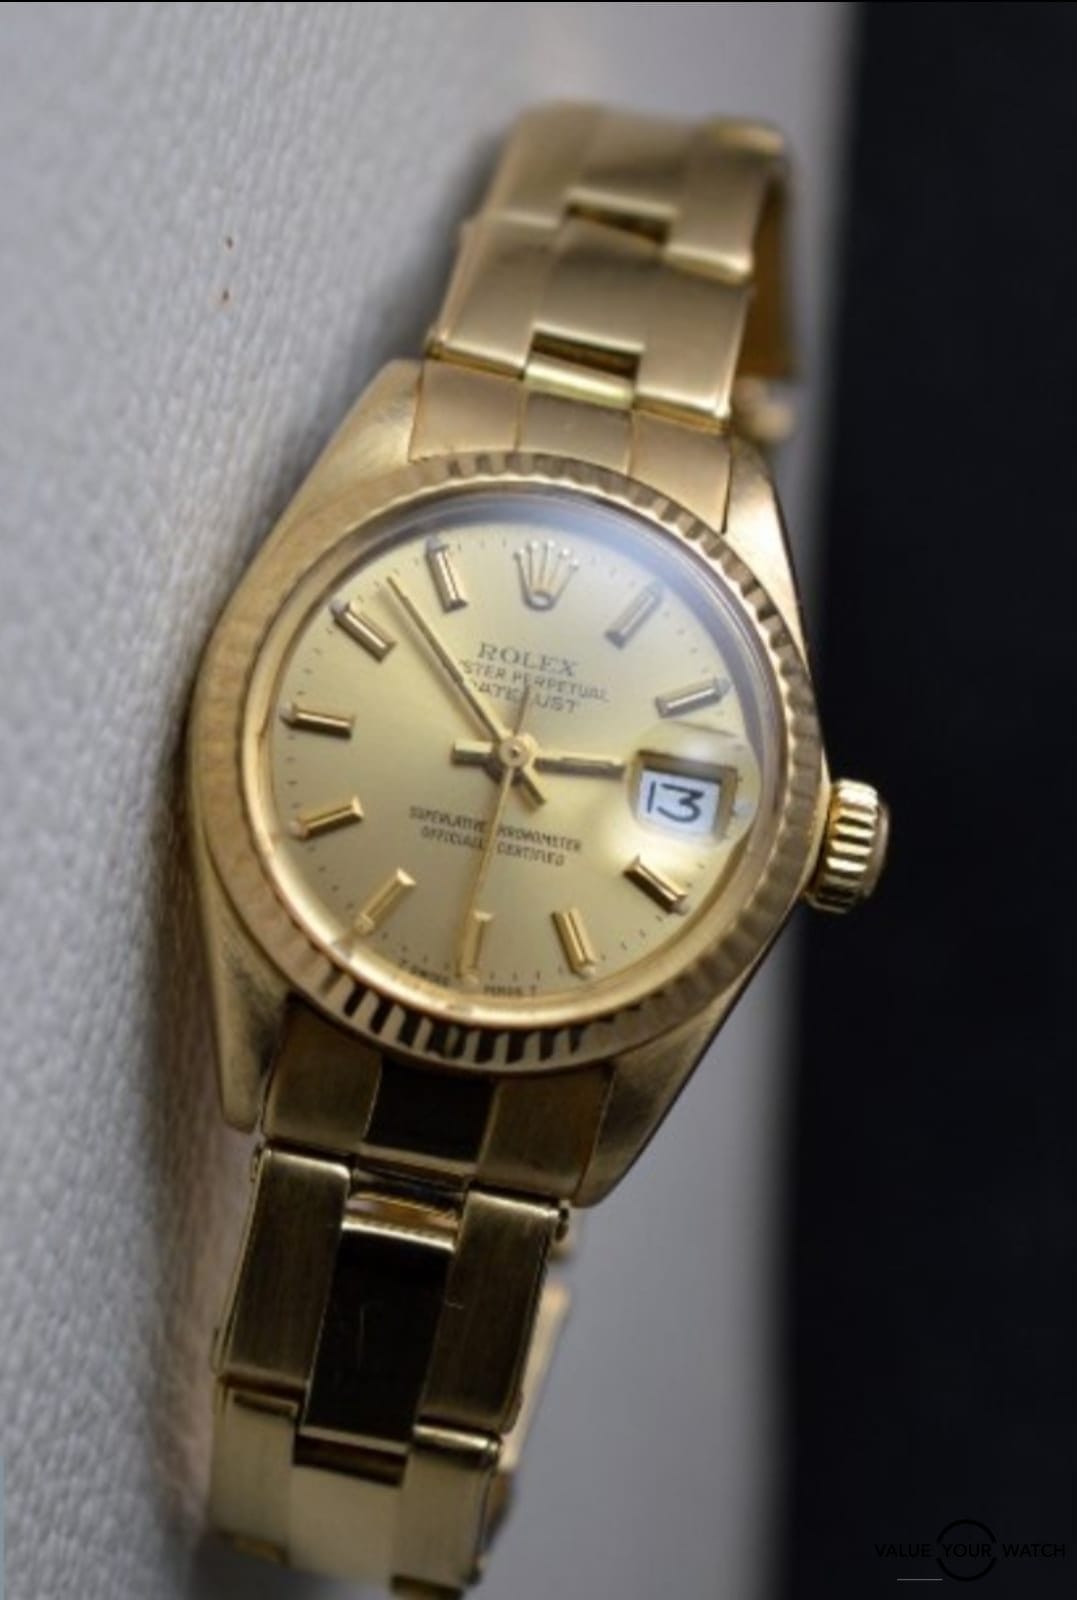 Rolex Datejust 26mm solid gold watch